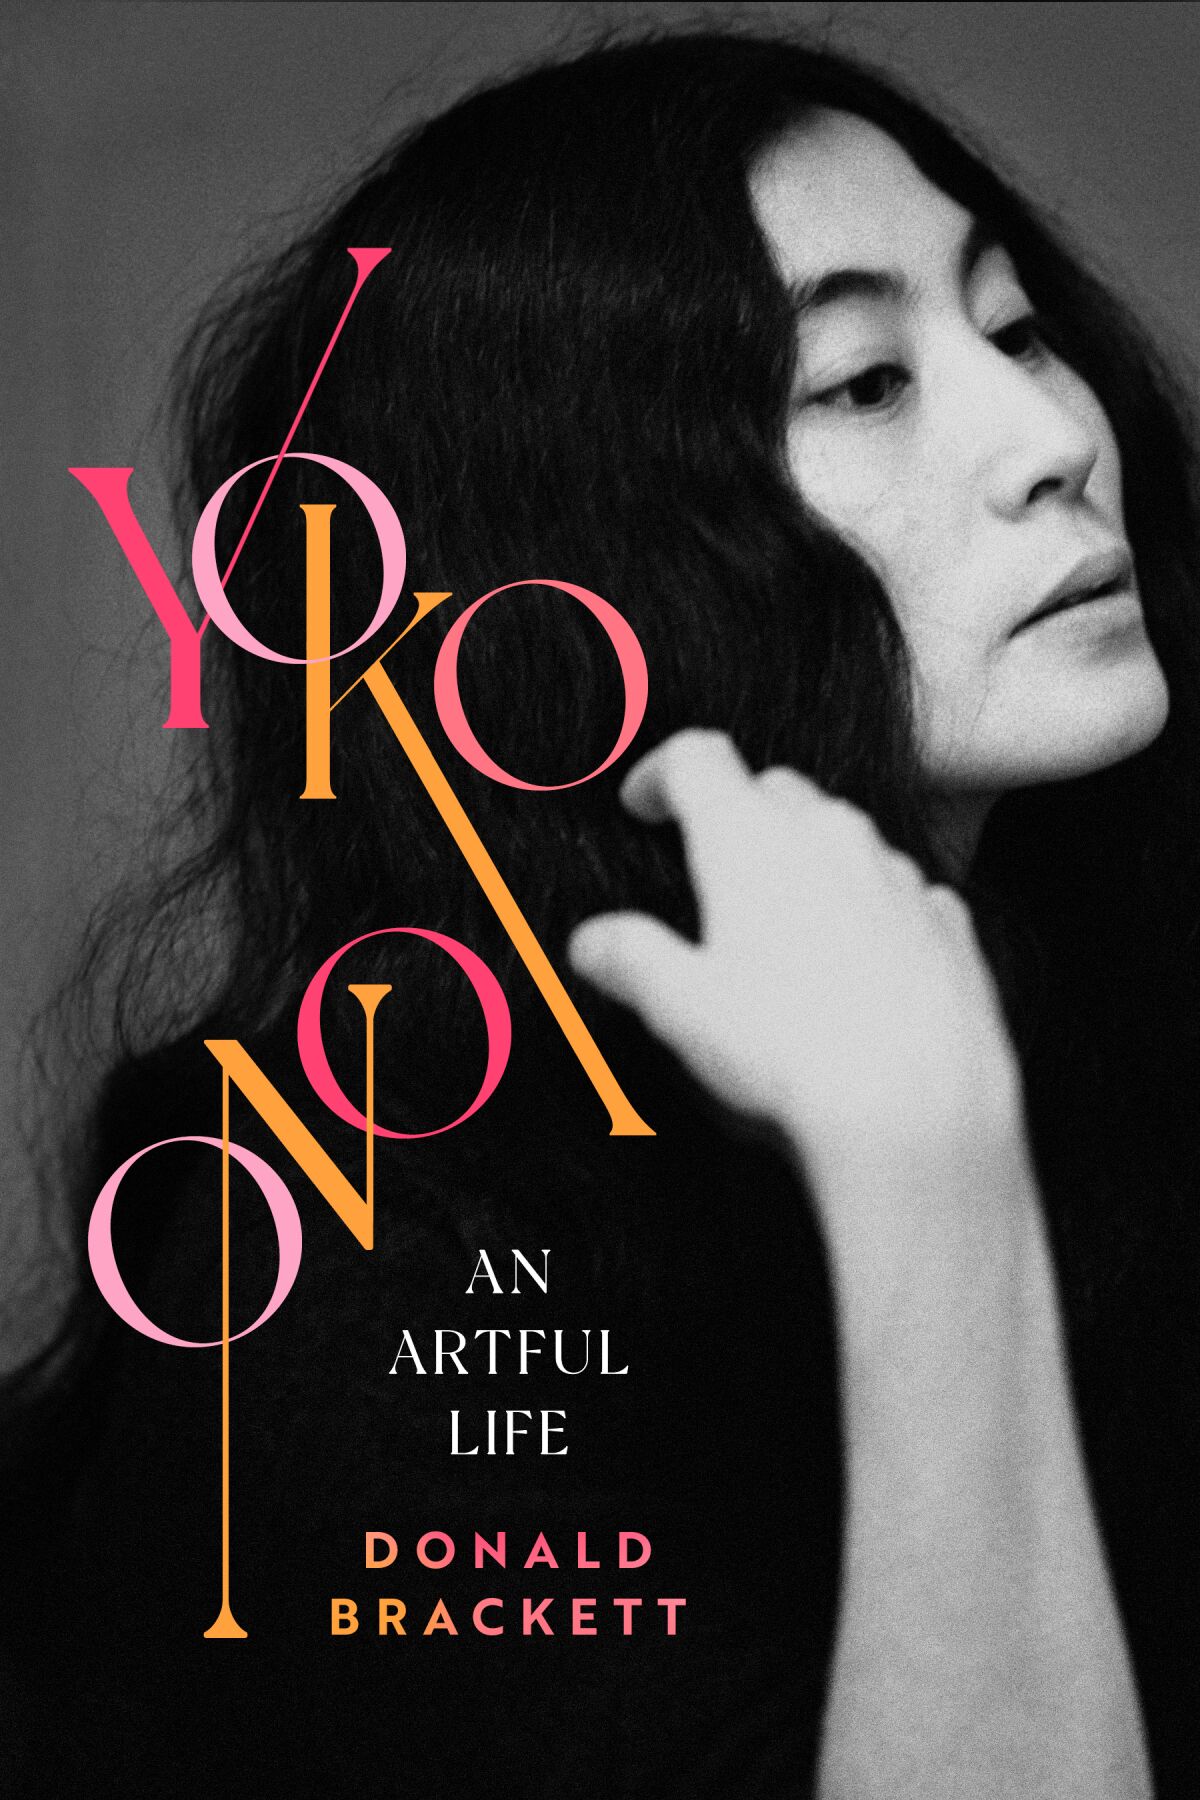 "Yoko Ono: An Artful Life" by Donald Brackett